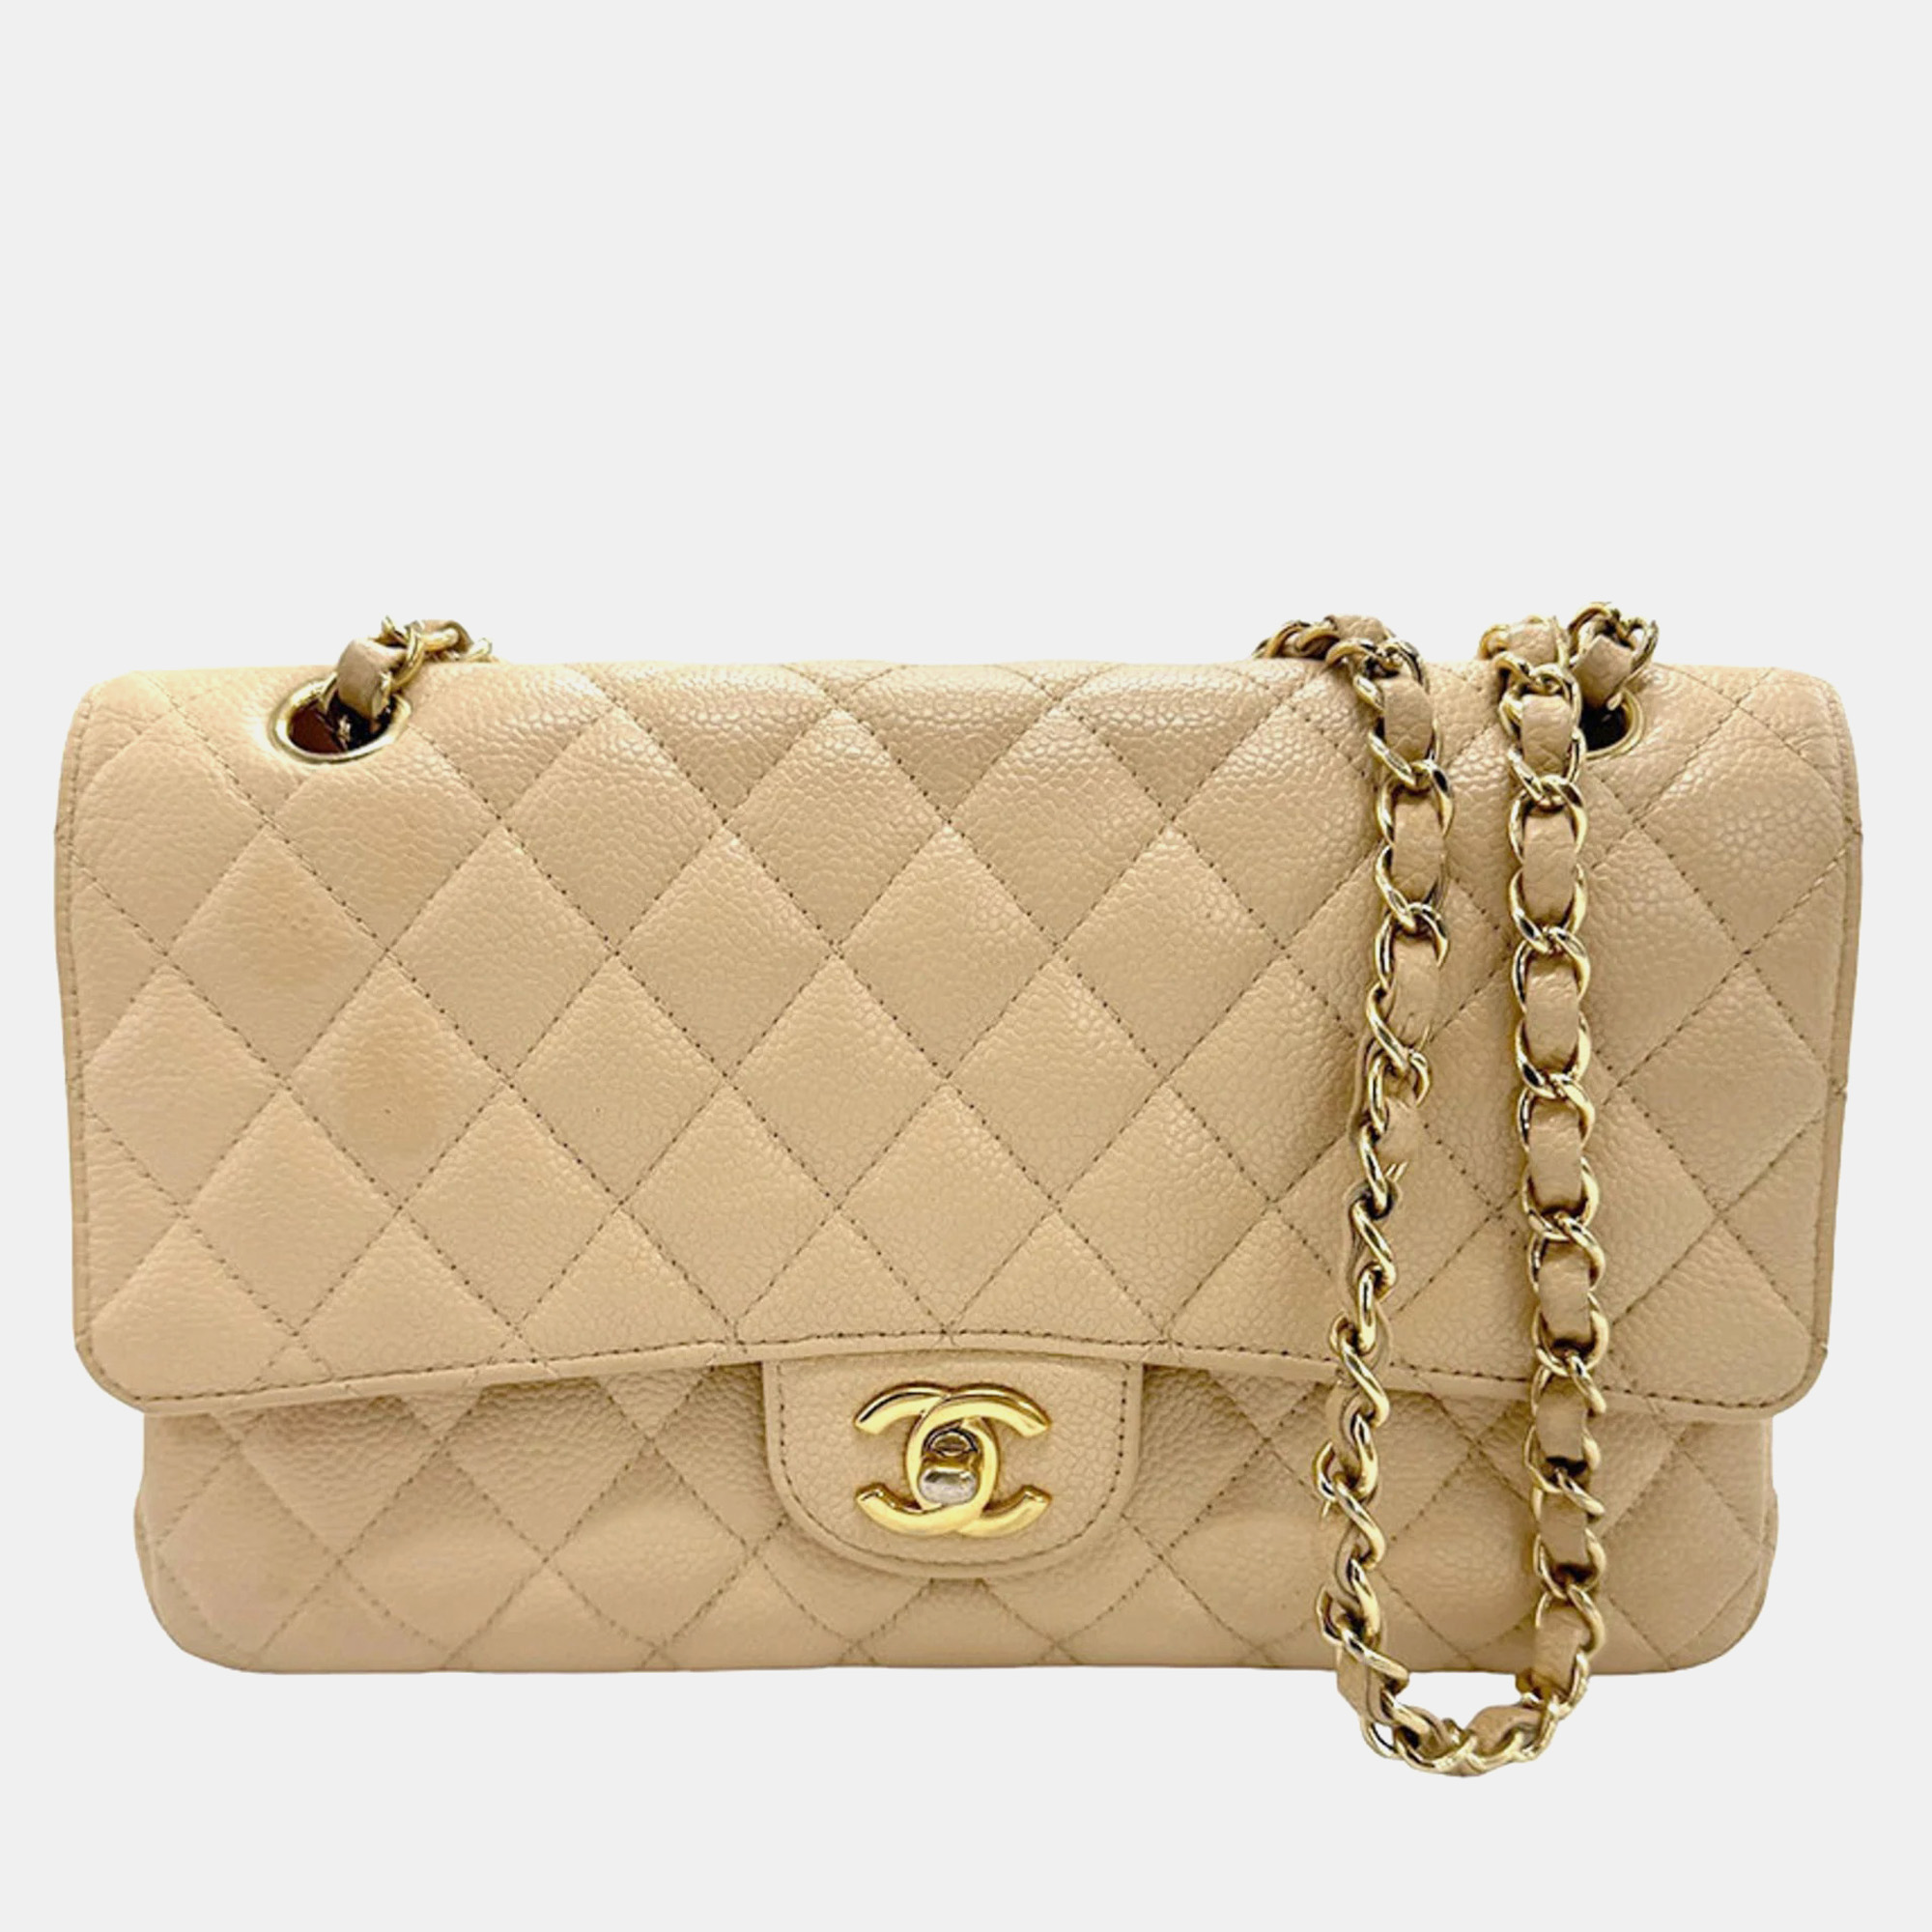 Chanel beige caviar leather medium classic double flap shoulder bag